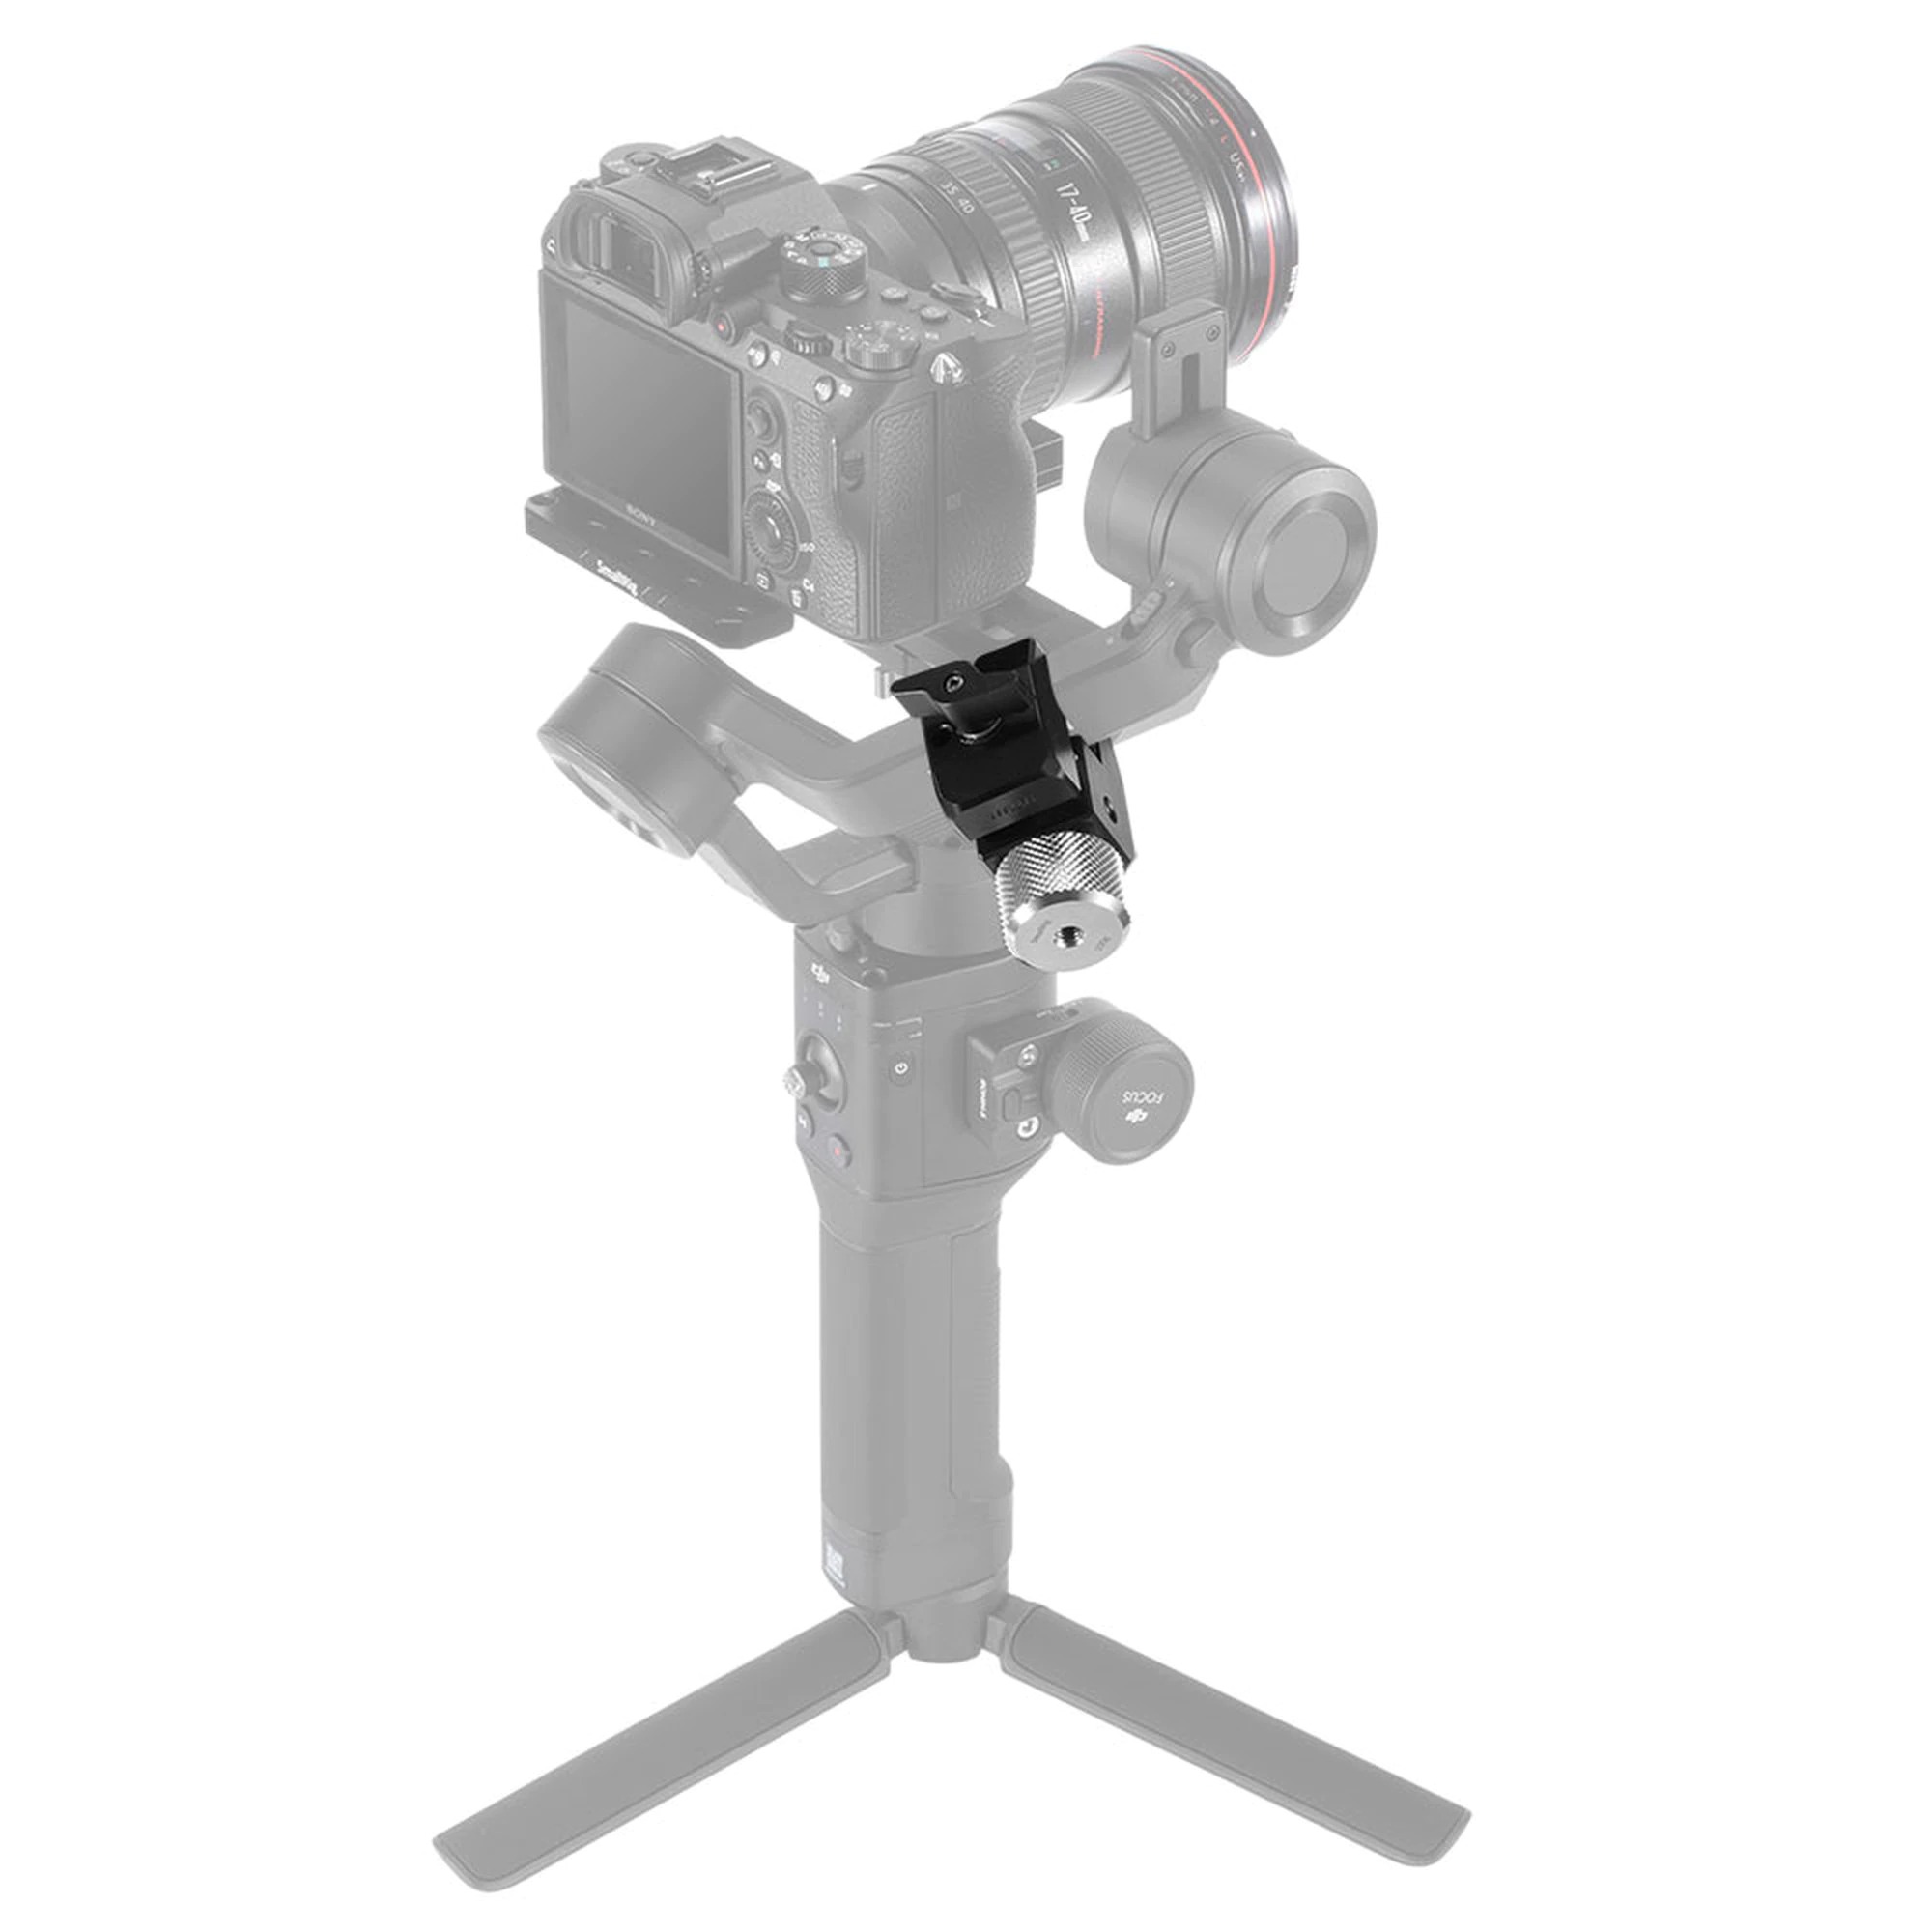 SmallRig Counterweight & Mounting Clamp Kit for DJI Ronin-S/Ronin-SC and Zhiyun WEEBILL-S/CRANE Series BSS2465 ชุดเวทถ่วงน้ำหนัก 100 และ 200 กรัม พร้อมแขนจับกิมบอล ช่วยในการตั้งบาลานซ์ สำหรับกล้อง Blackmagic Pocket 4K/6K ราคา 1400 บาท